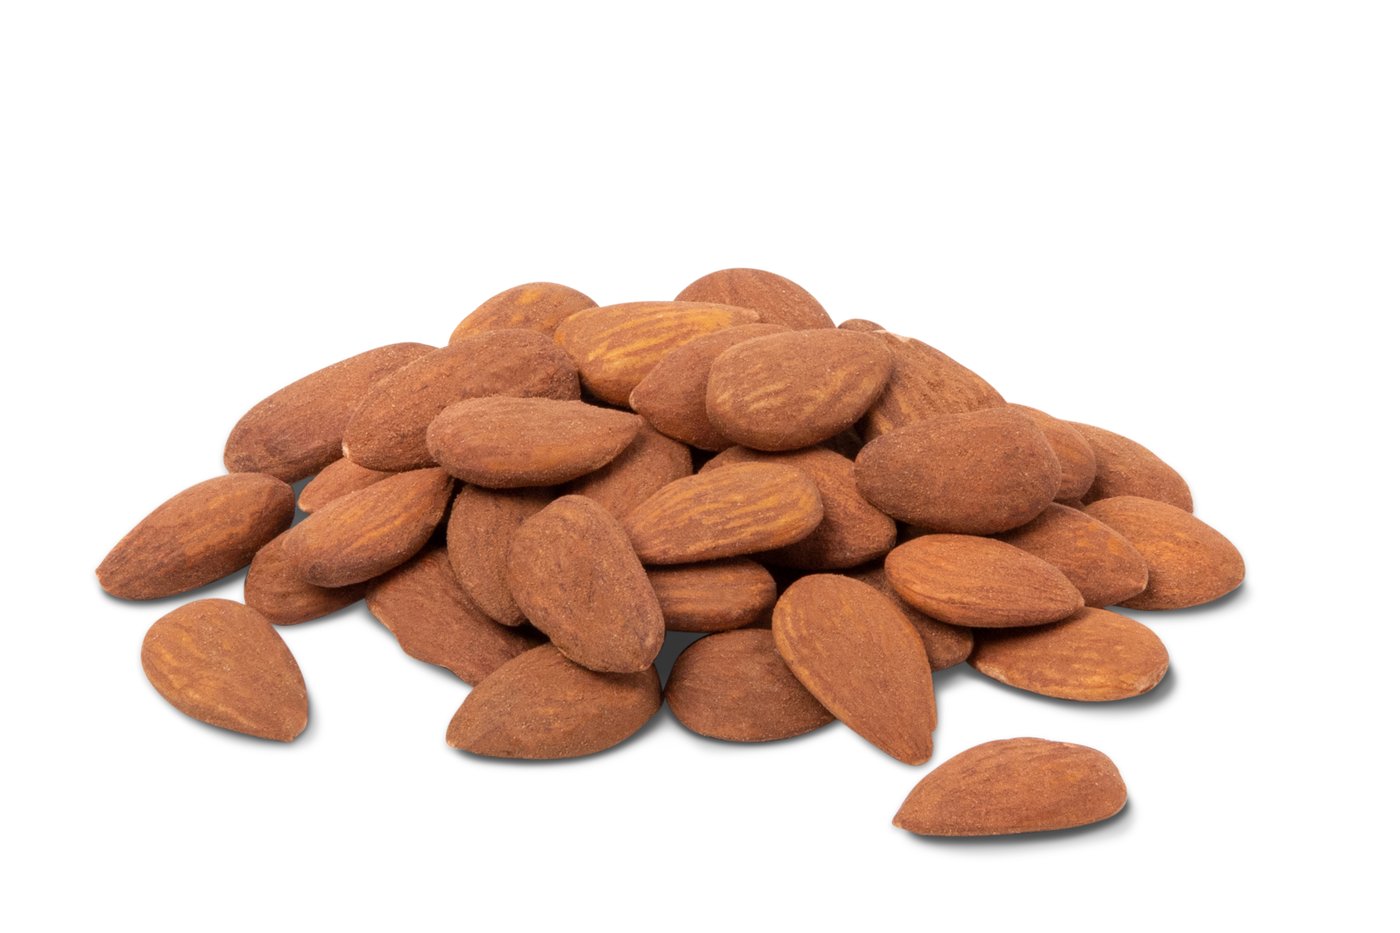 Organic Dry Roasted Almonds (50% Less Salt) image zoom